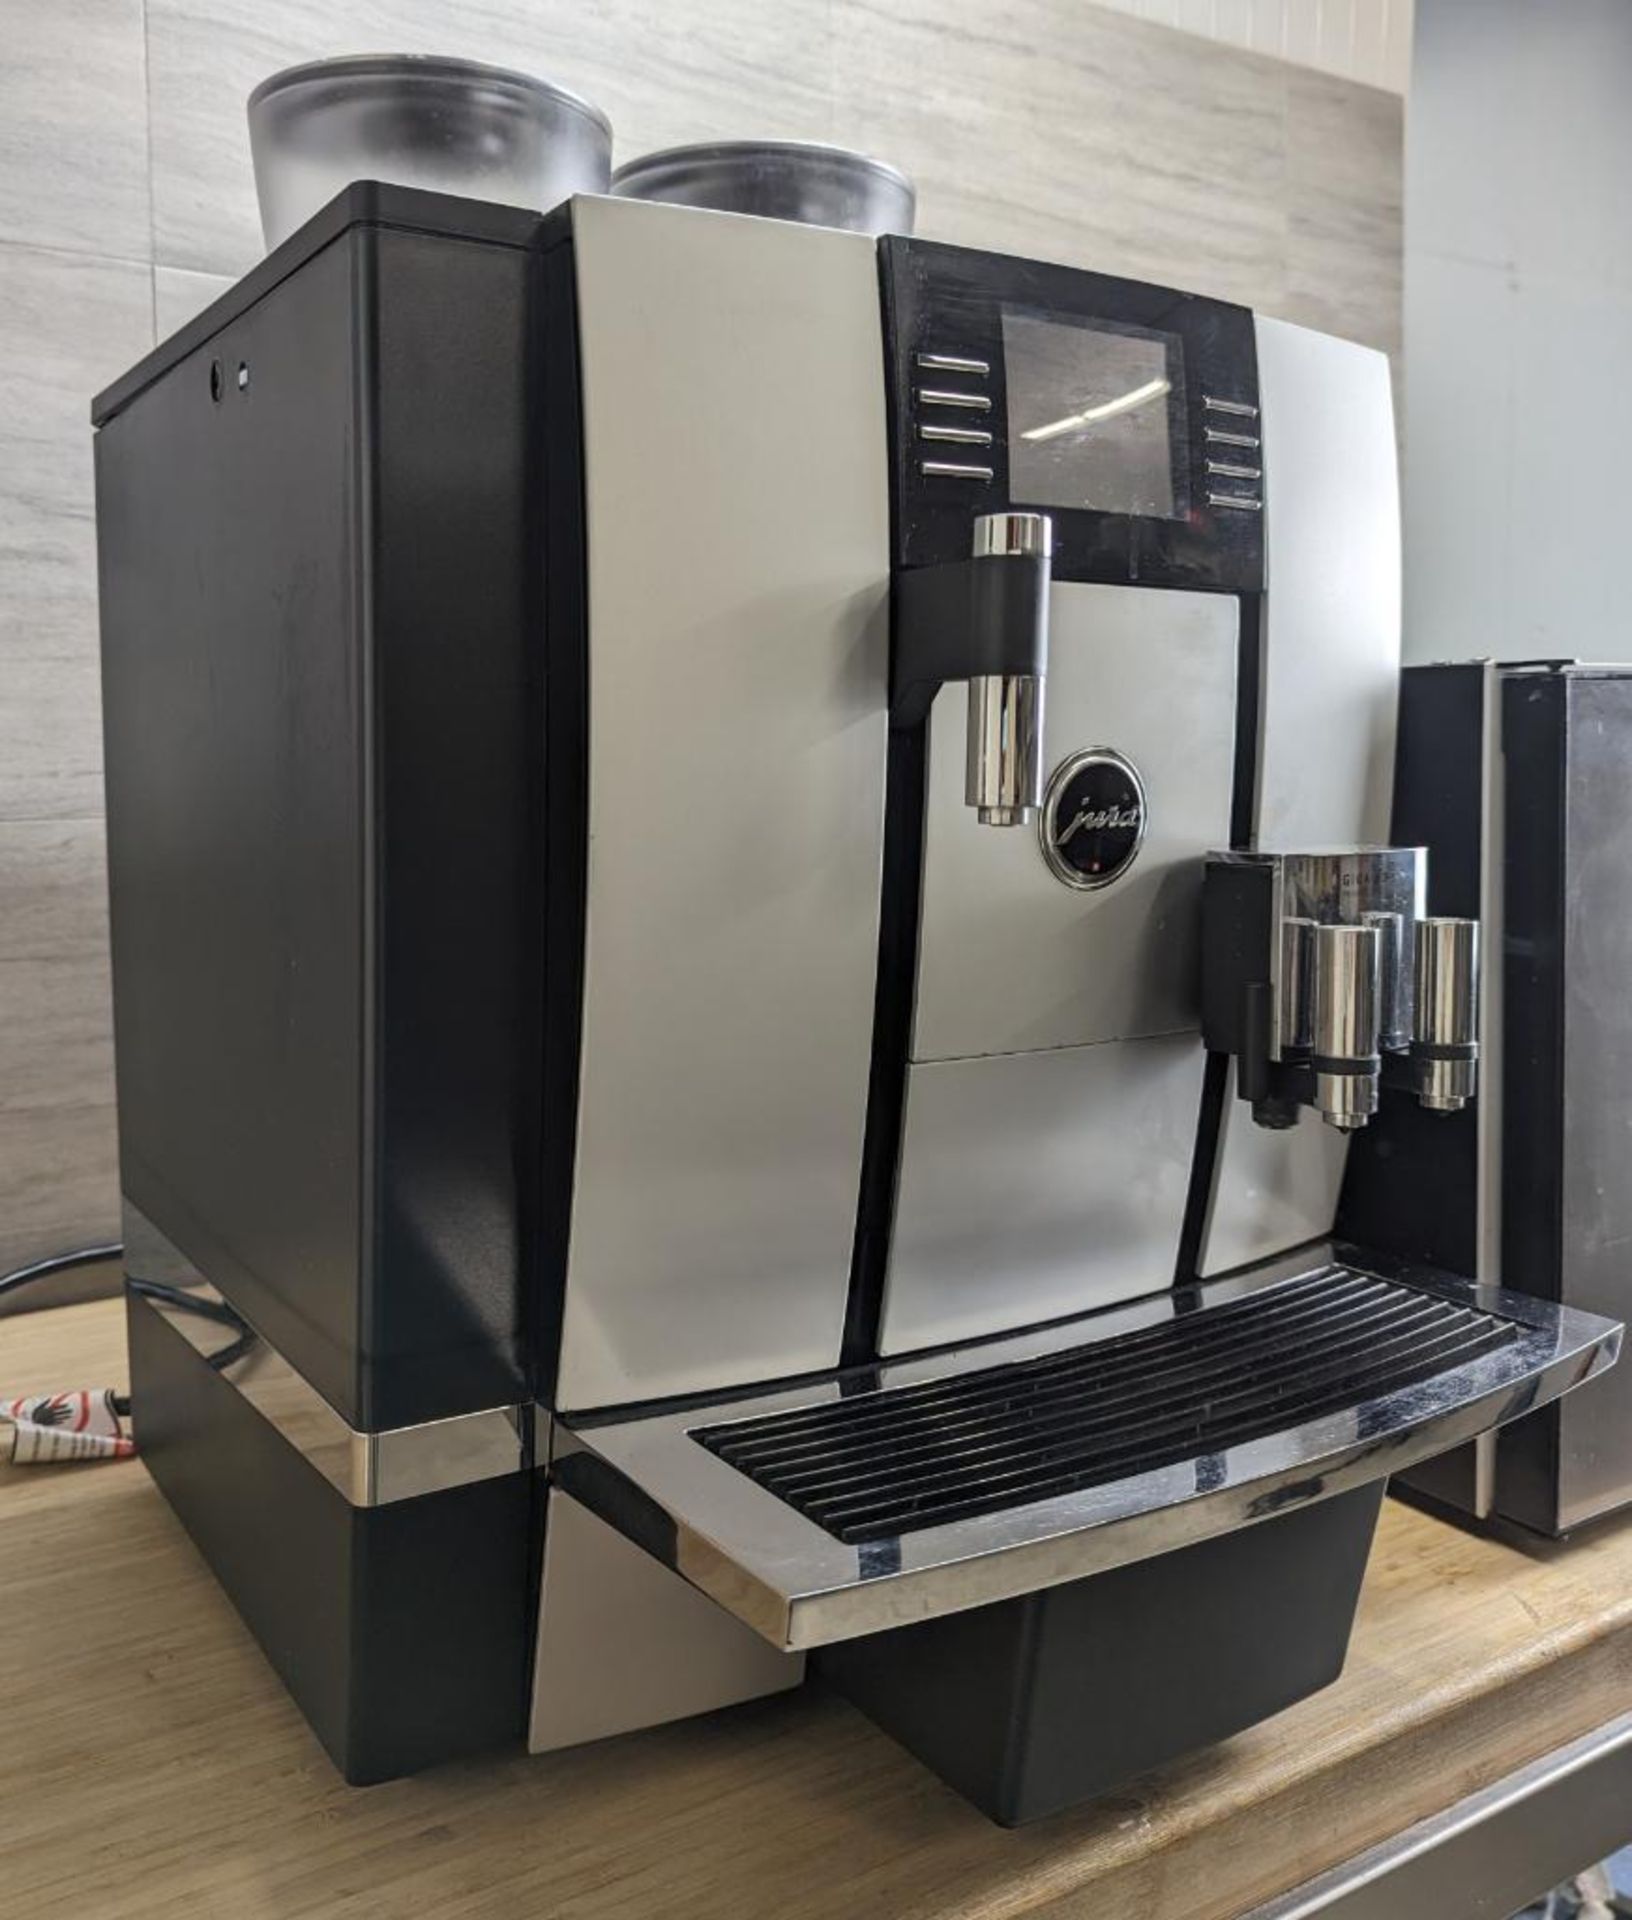 JURA GIGA X7 PROFESSIONAL AUTOMATIC COFFEE MACHINE WITH MILK COOLER - Image 2 of 16